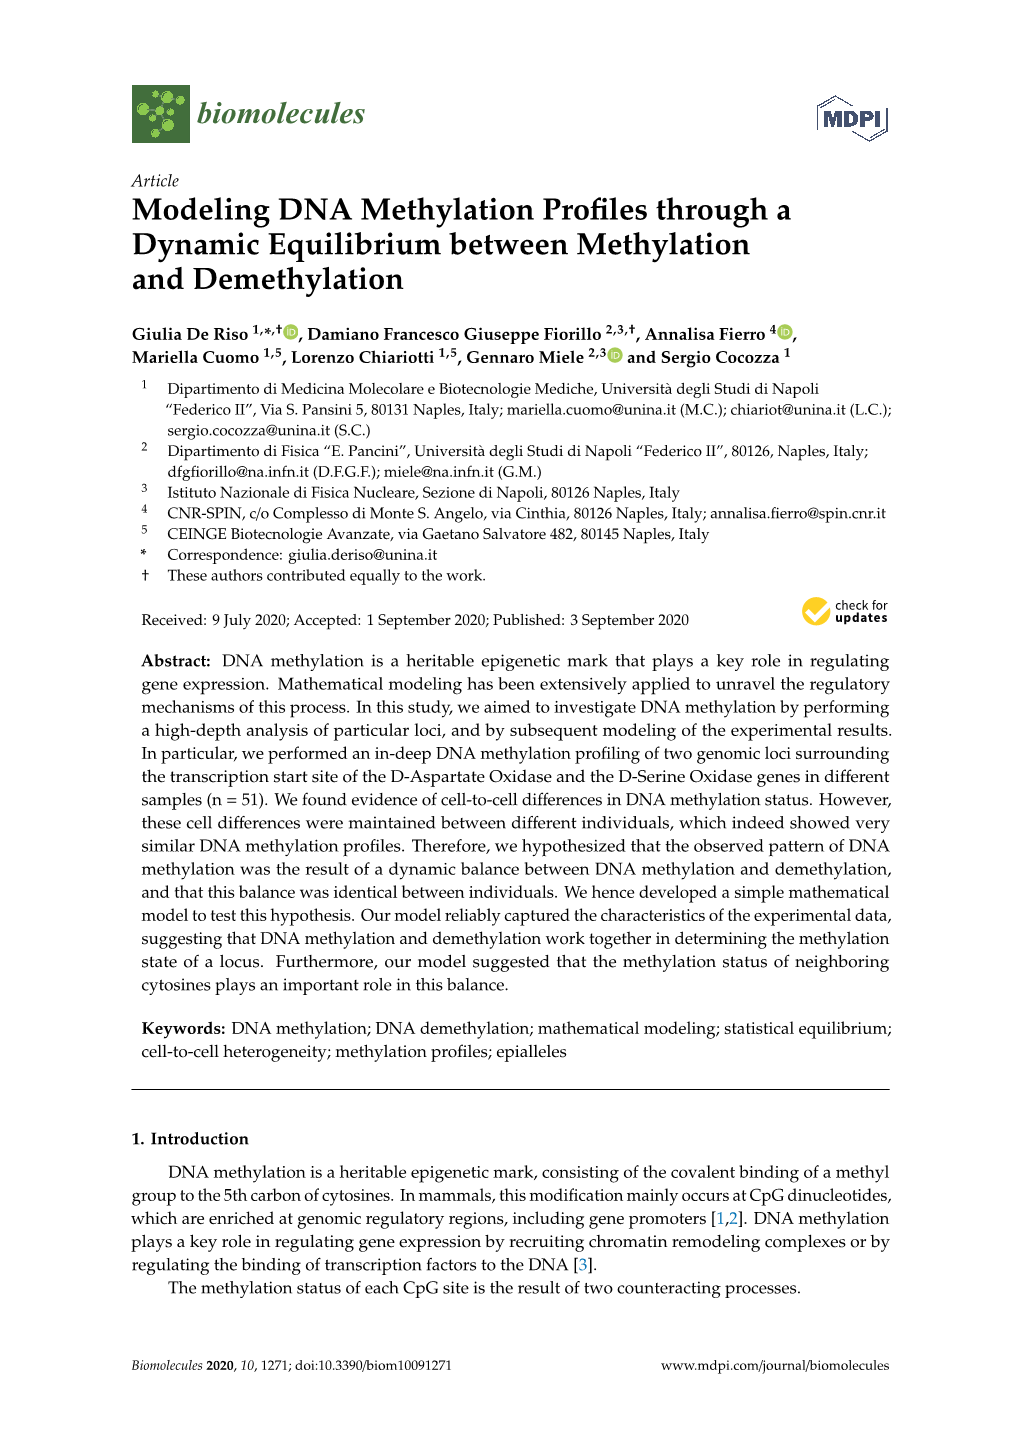 Modeling DNA Methylation Profiles Through a Dynamic Equilibrium Between Methylation and Demethylation